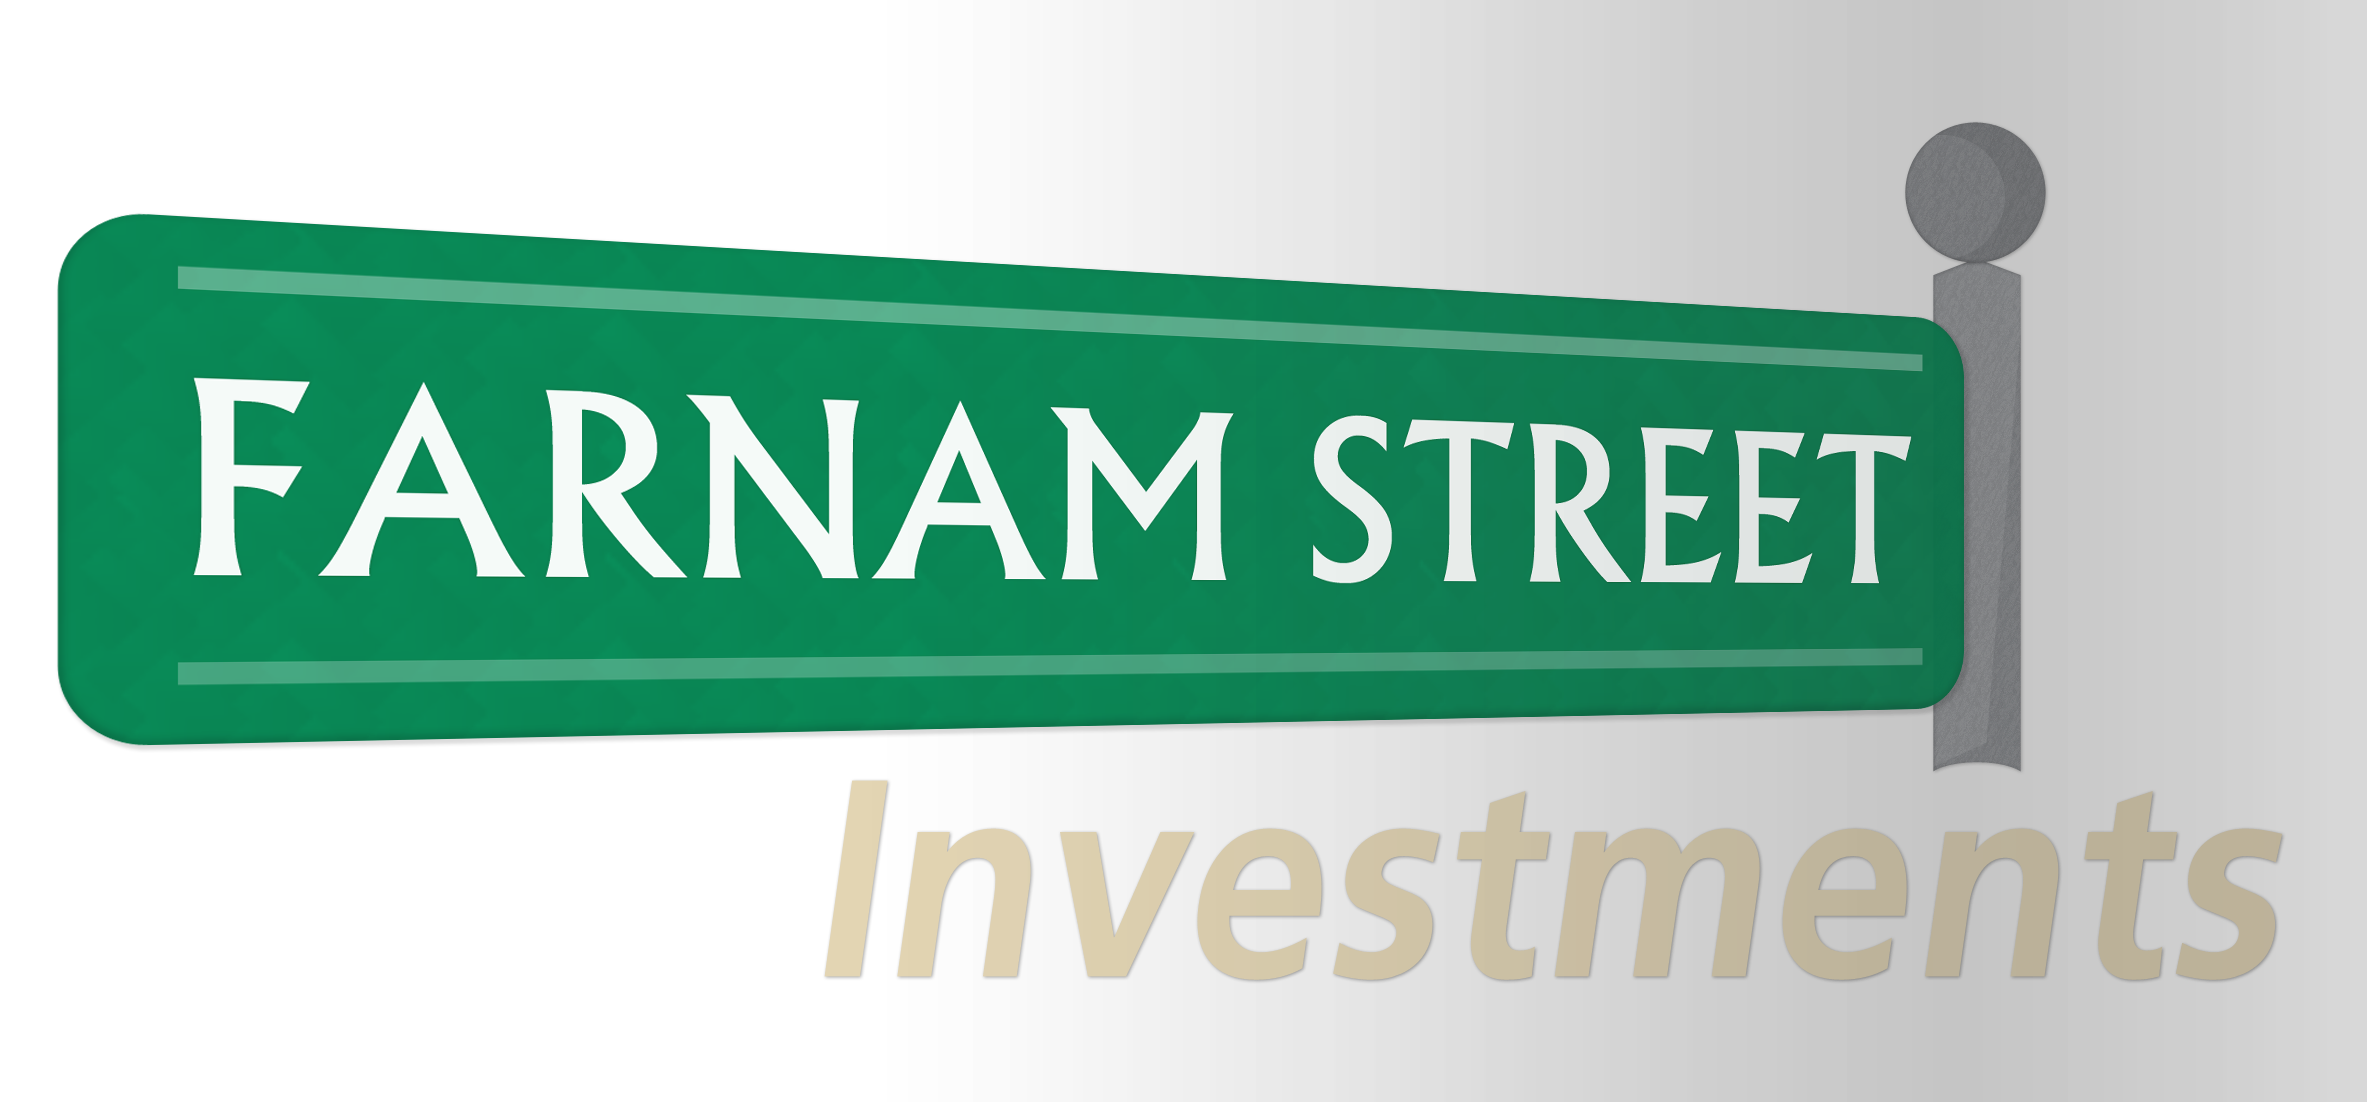 Farnam Street Investments